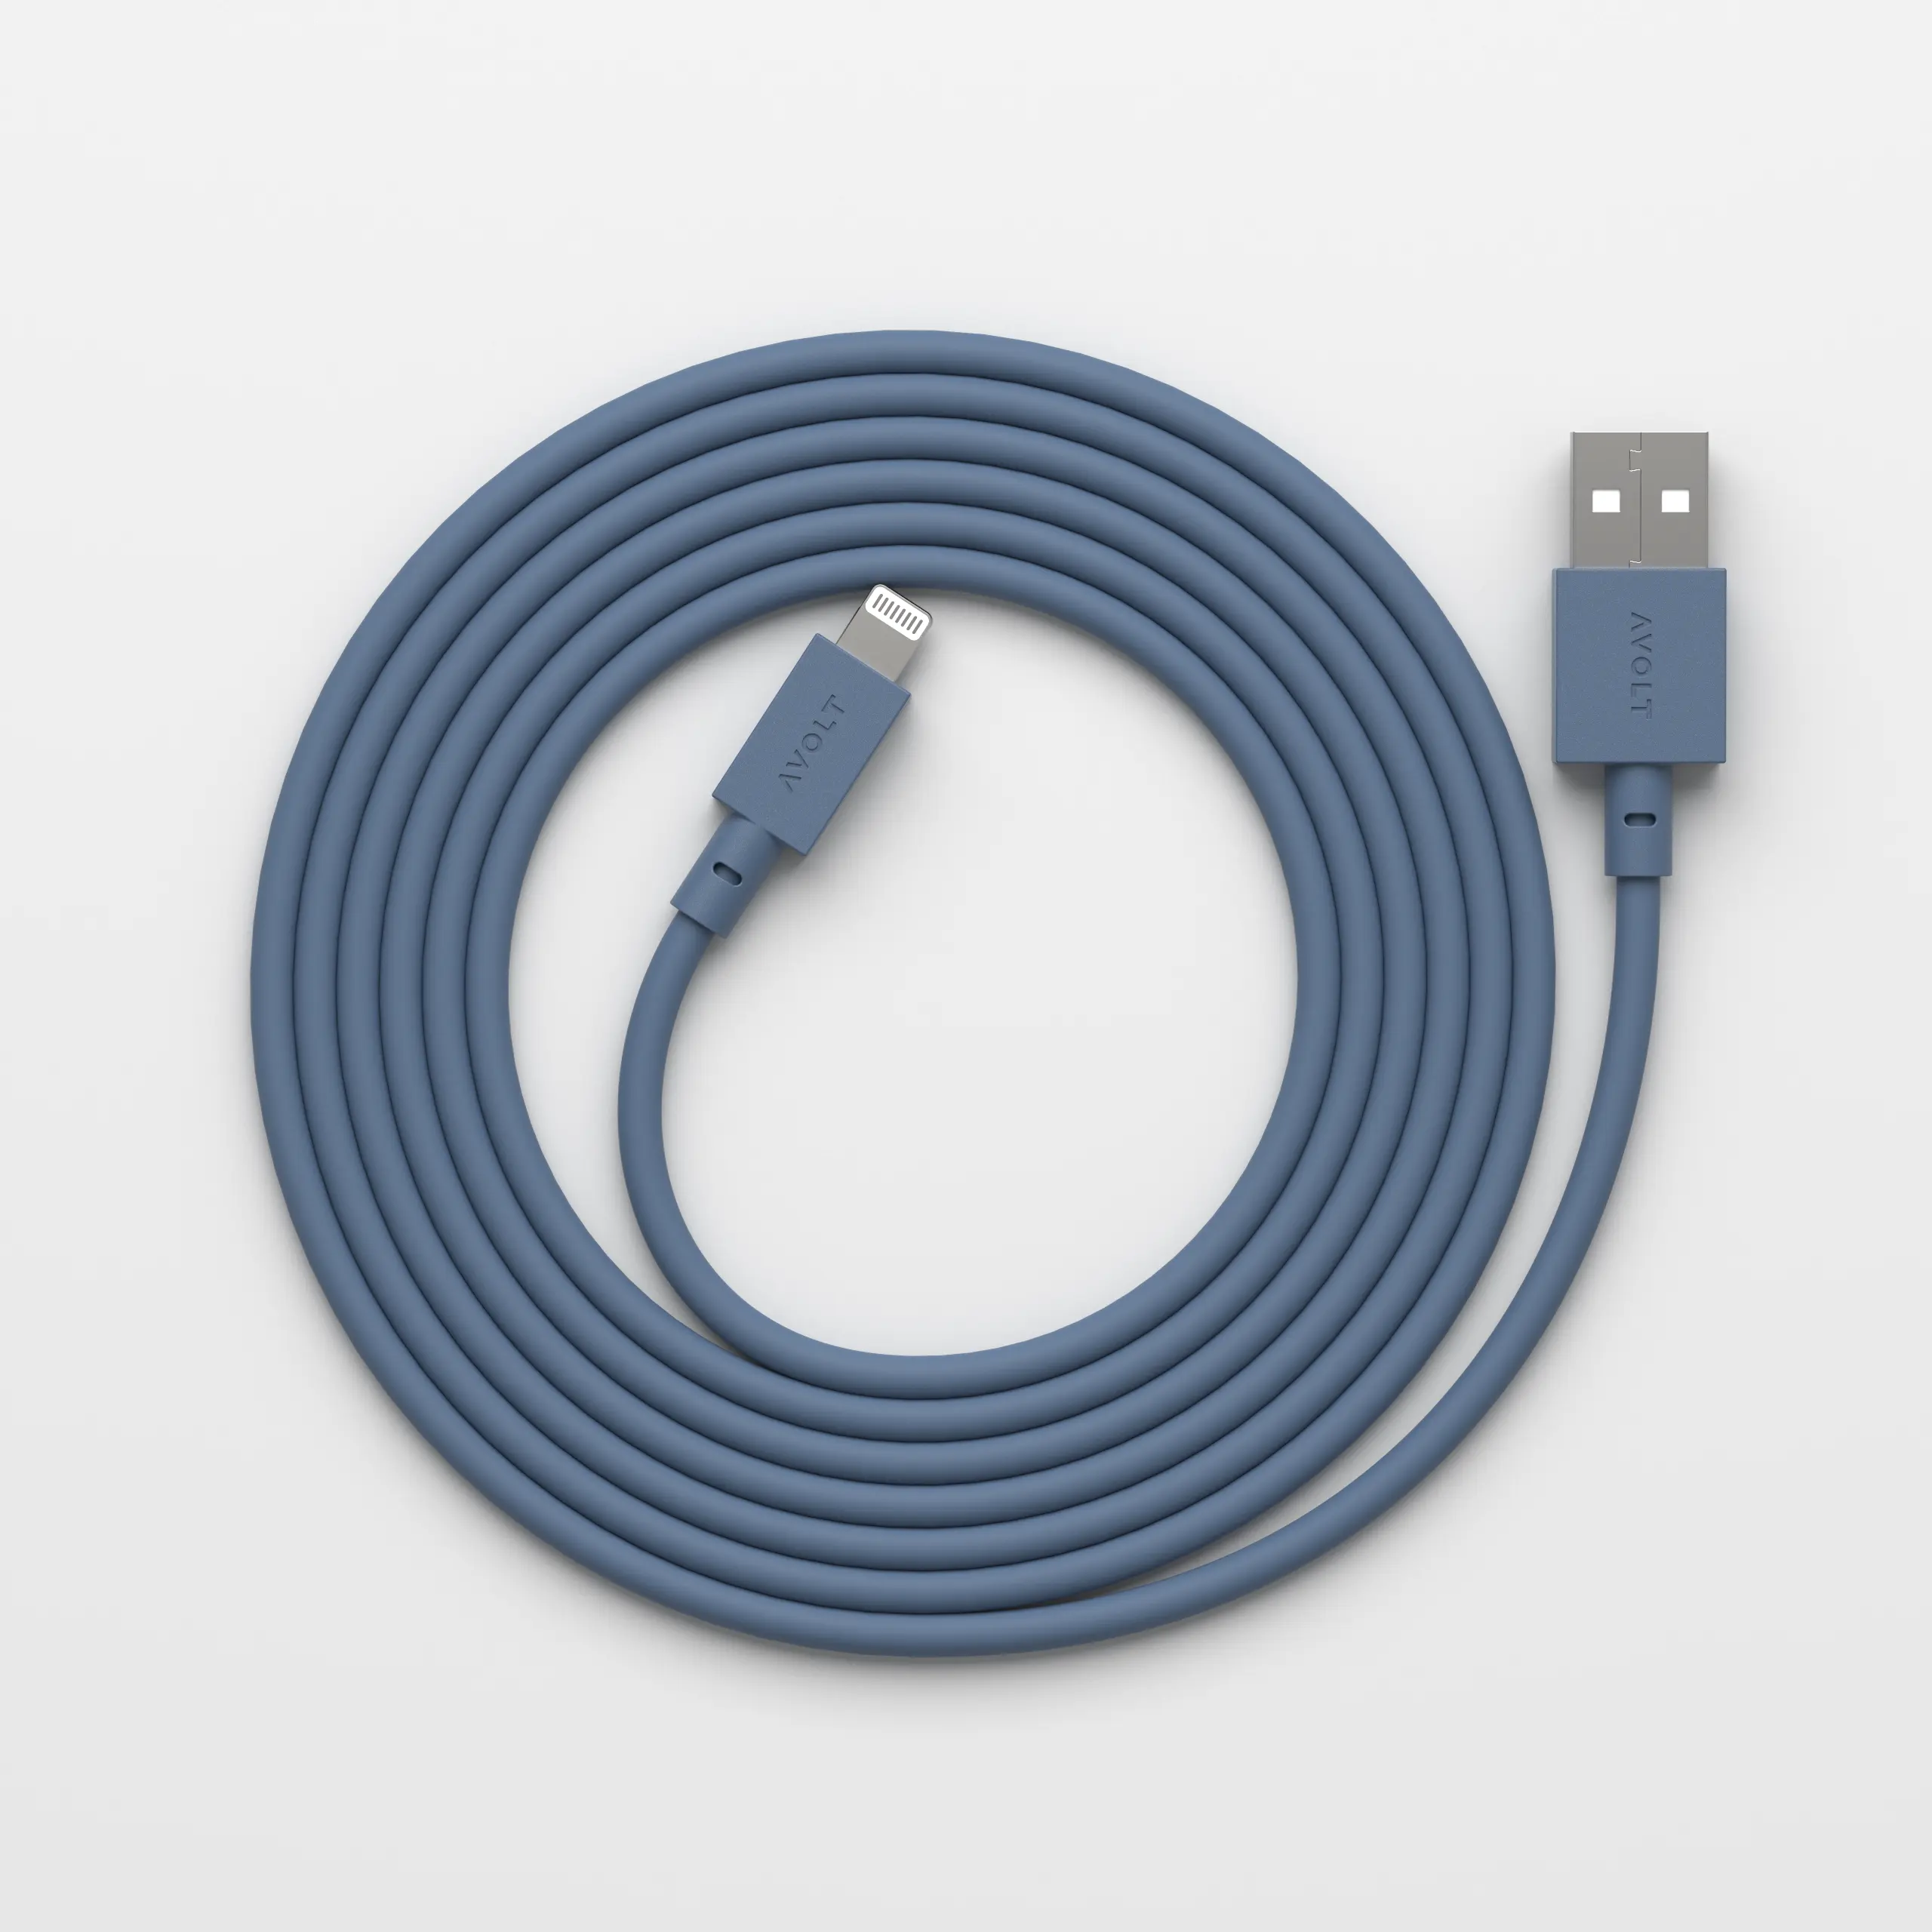 AVOLT Cable 1 Ocean Blue